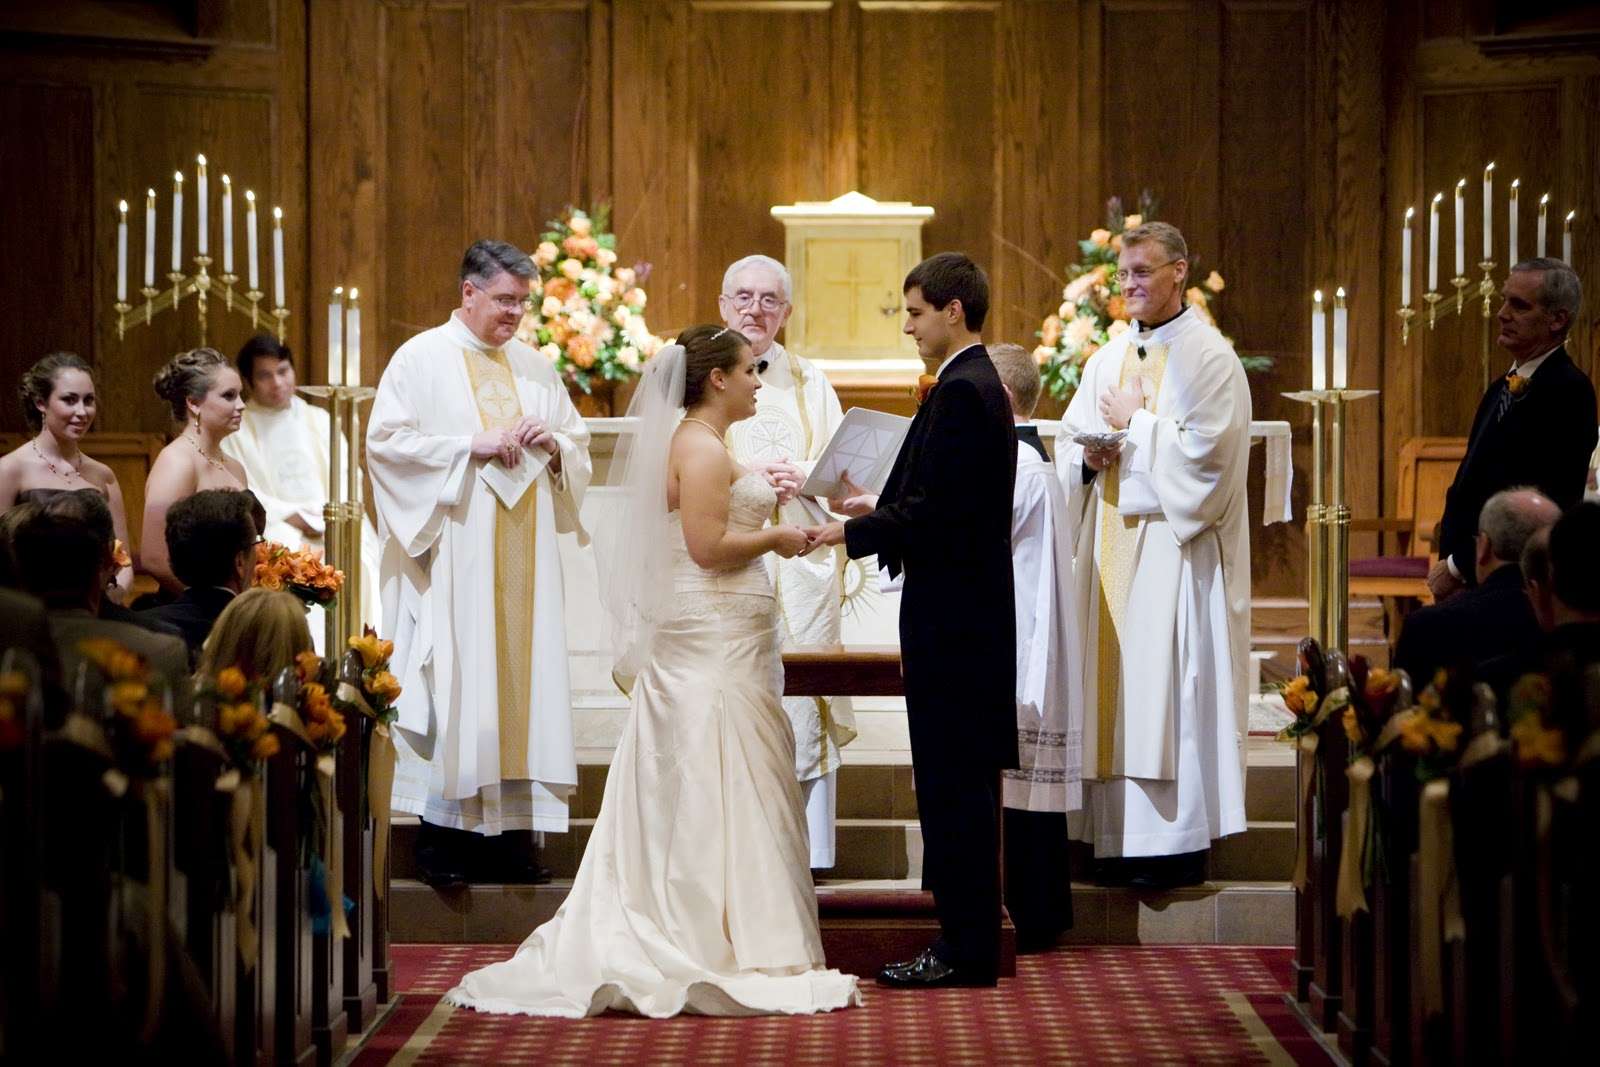 Christian Wedding Rituals, Traditions